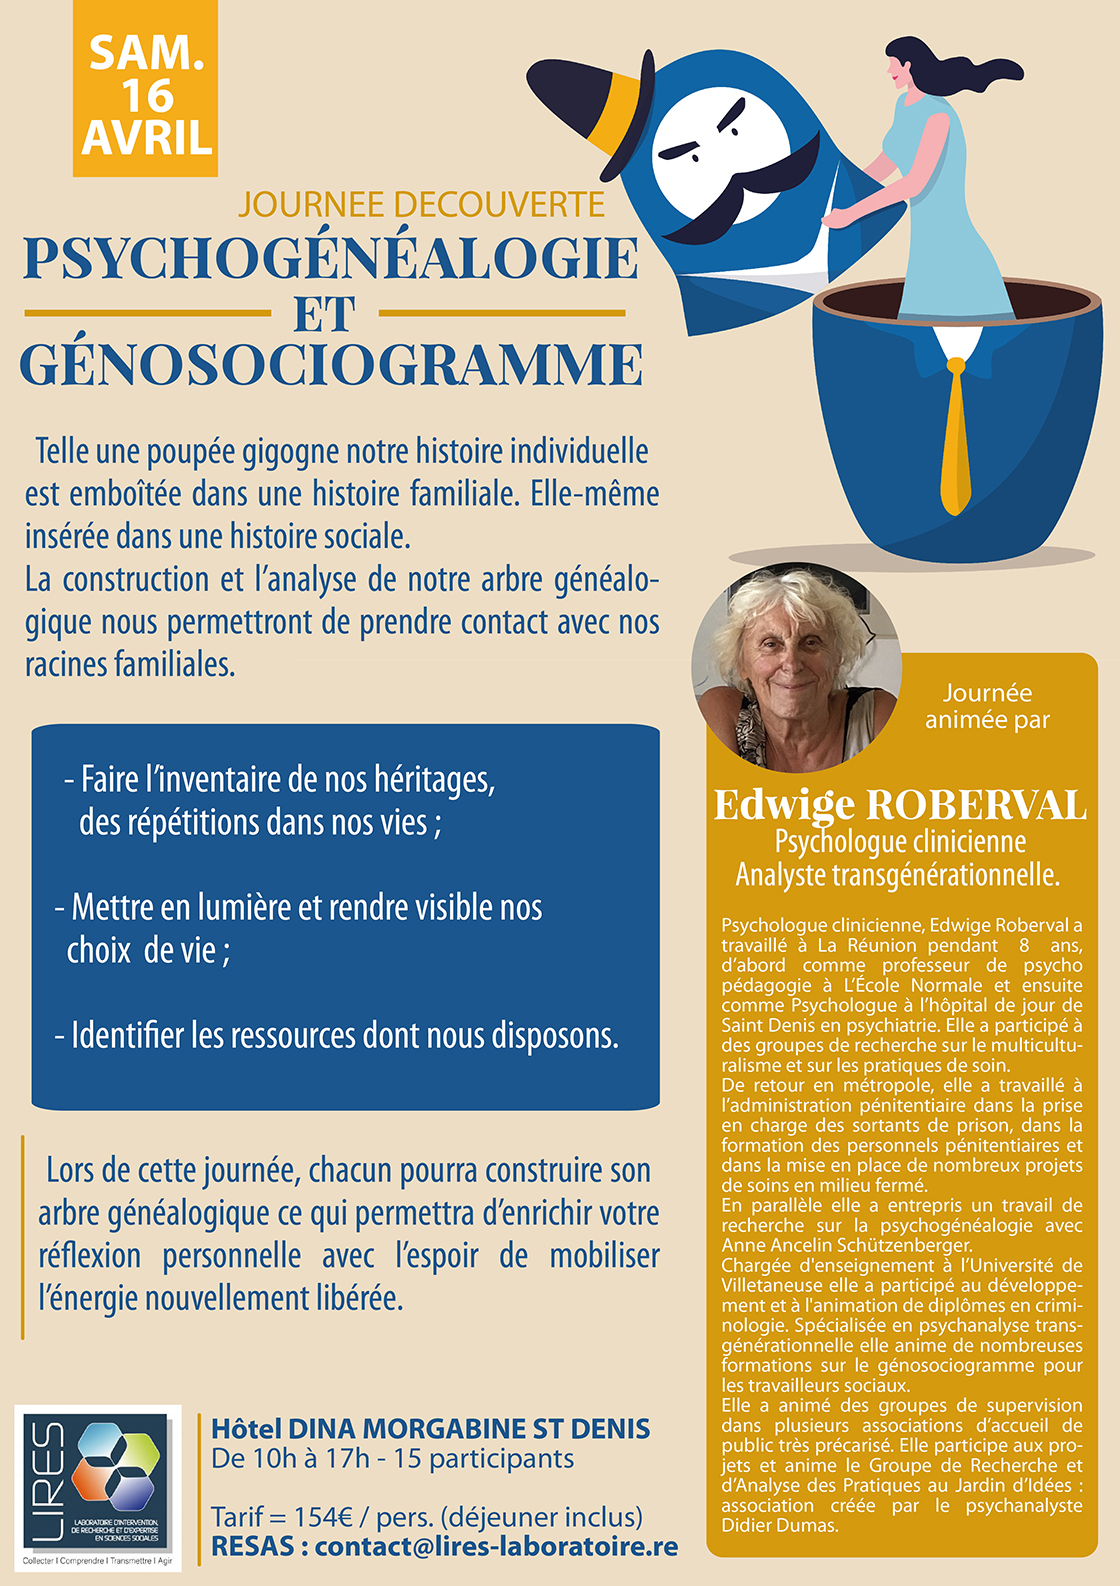 [ Event ] Psychogénéalogie et Génosociogramme